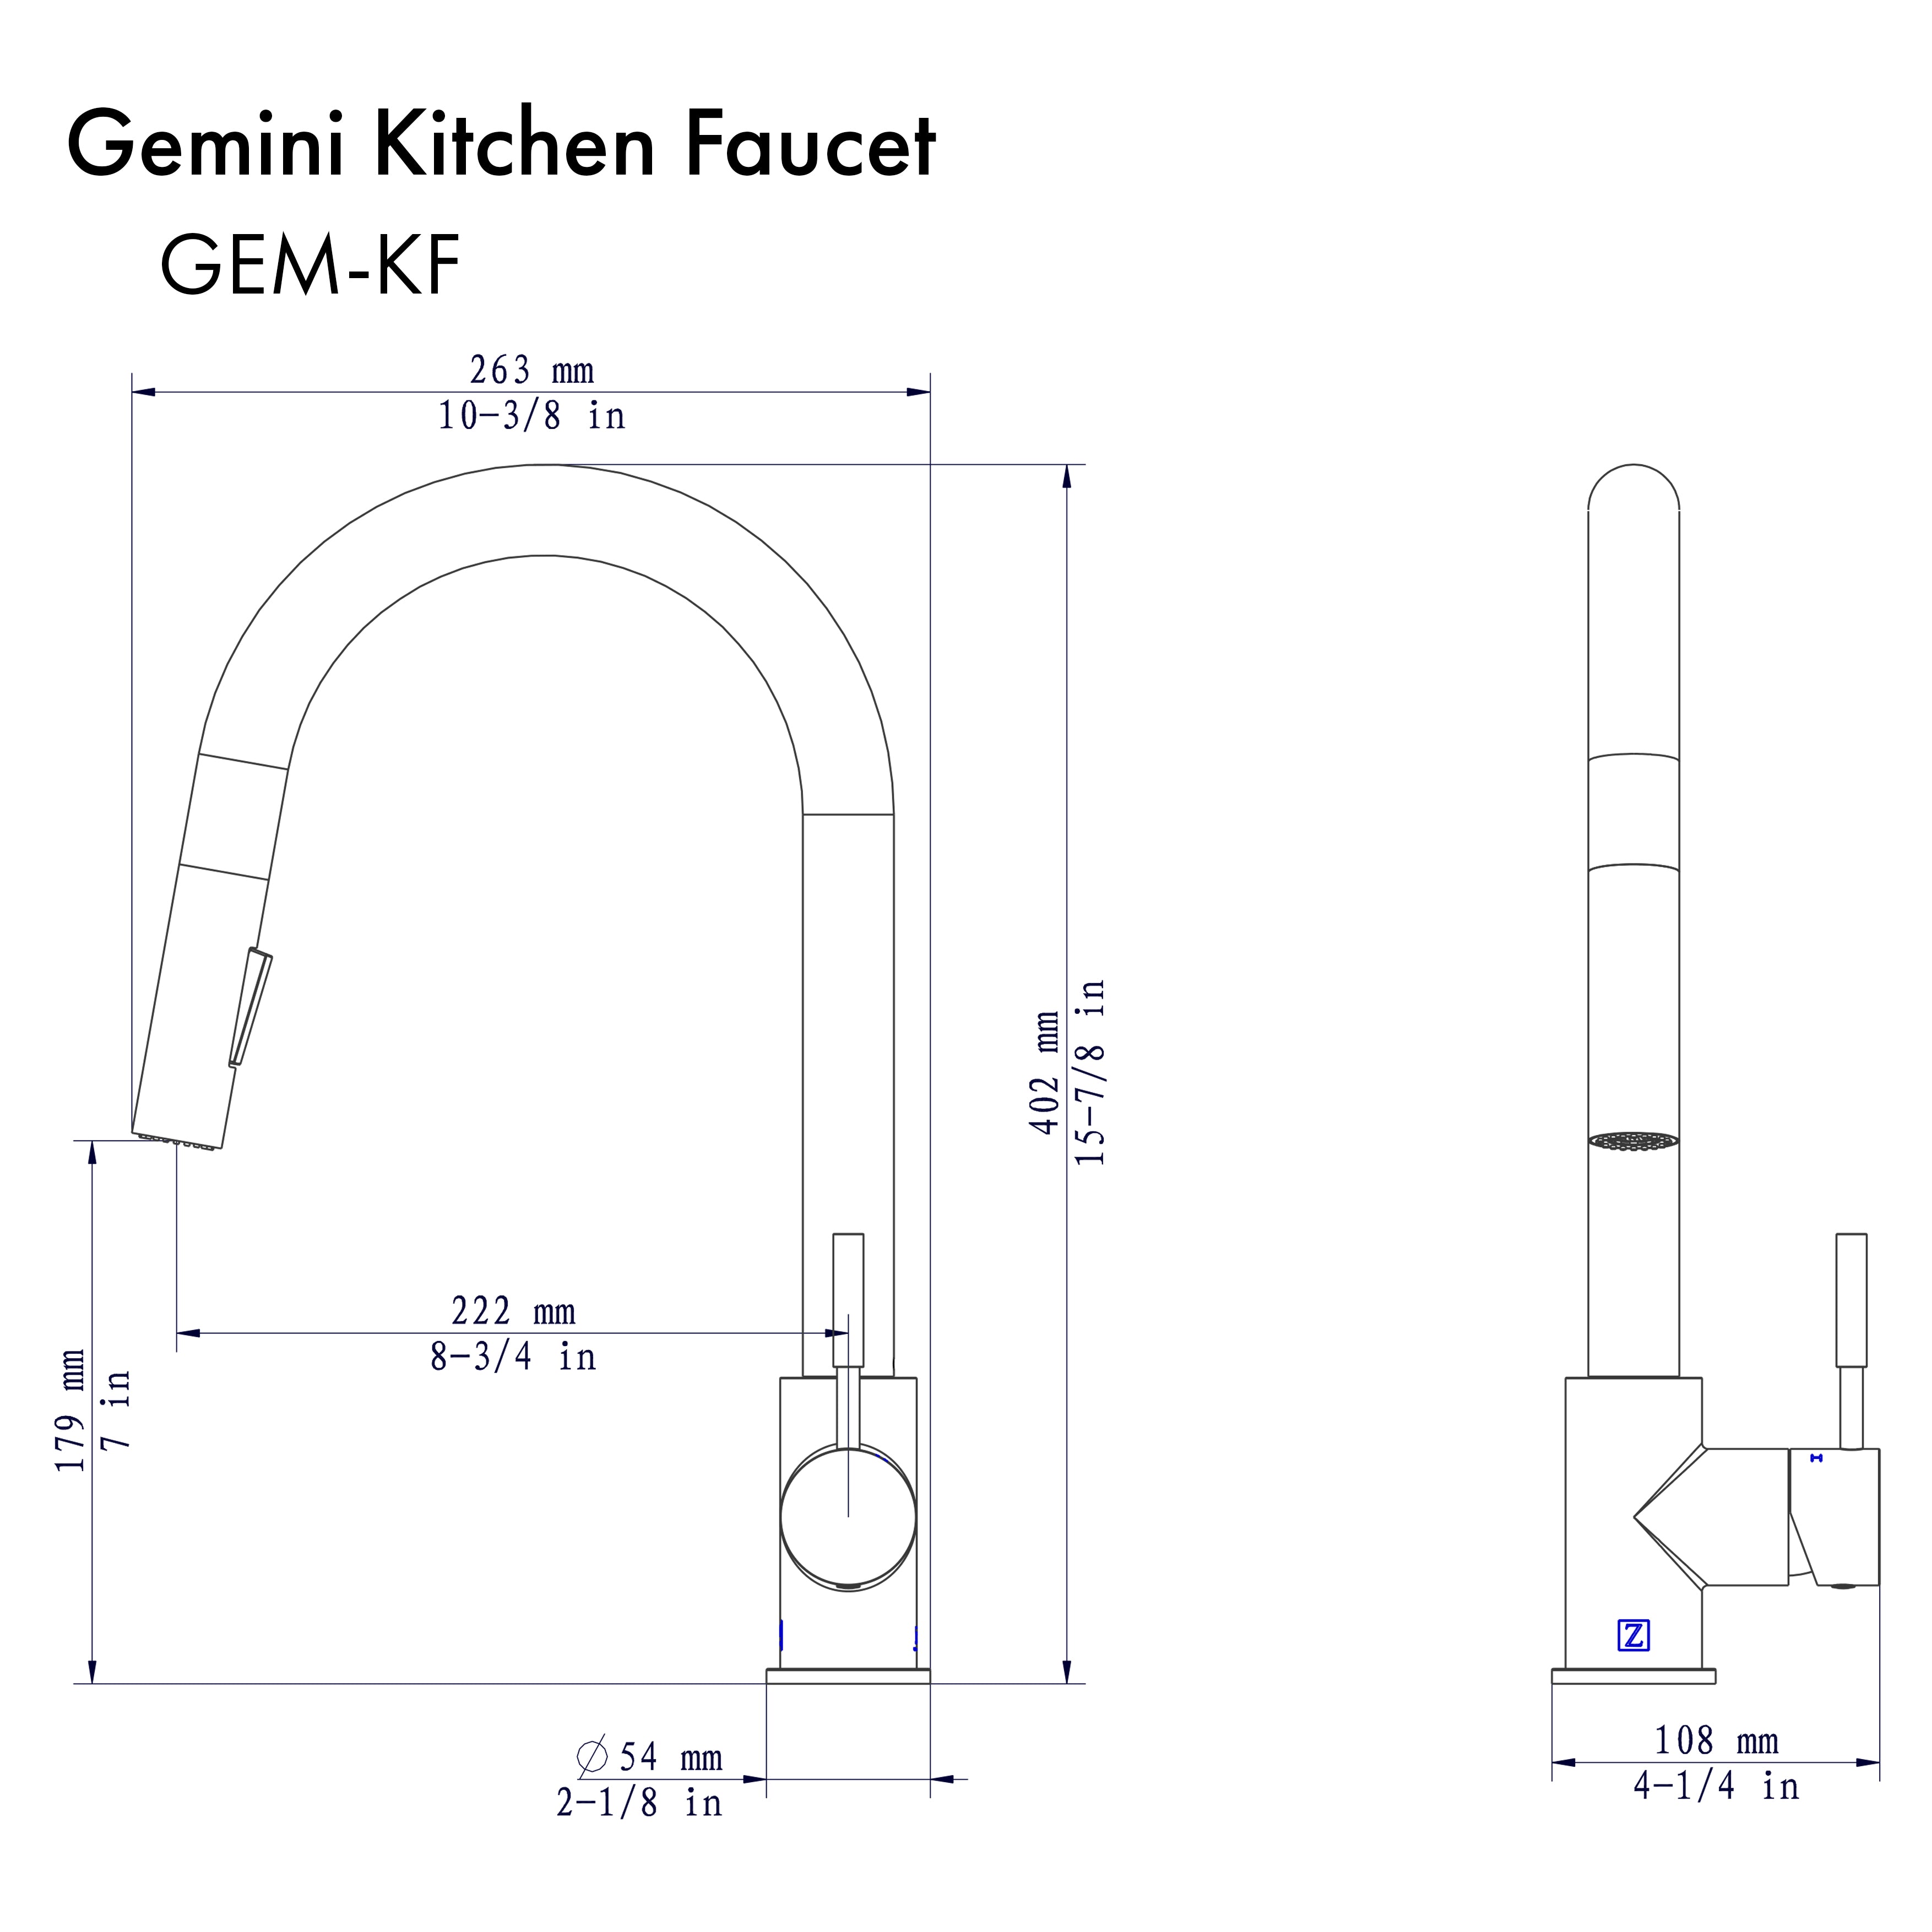 ZLINE Gemini Kitchen Faucet in Gun Metal (GEM-KF-GM)